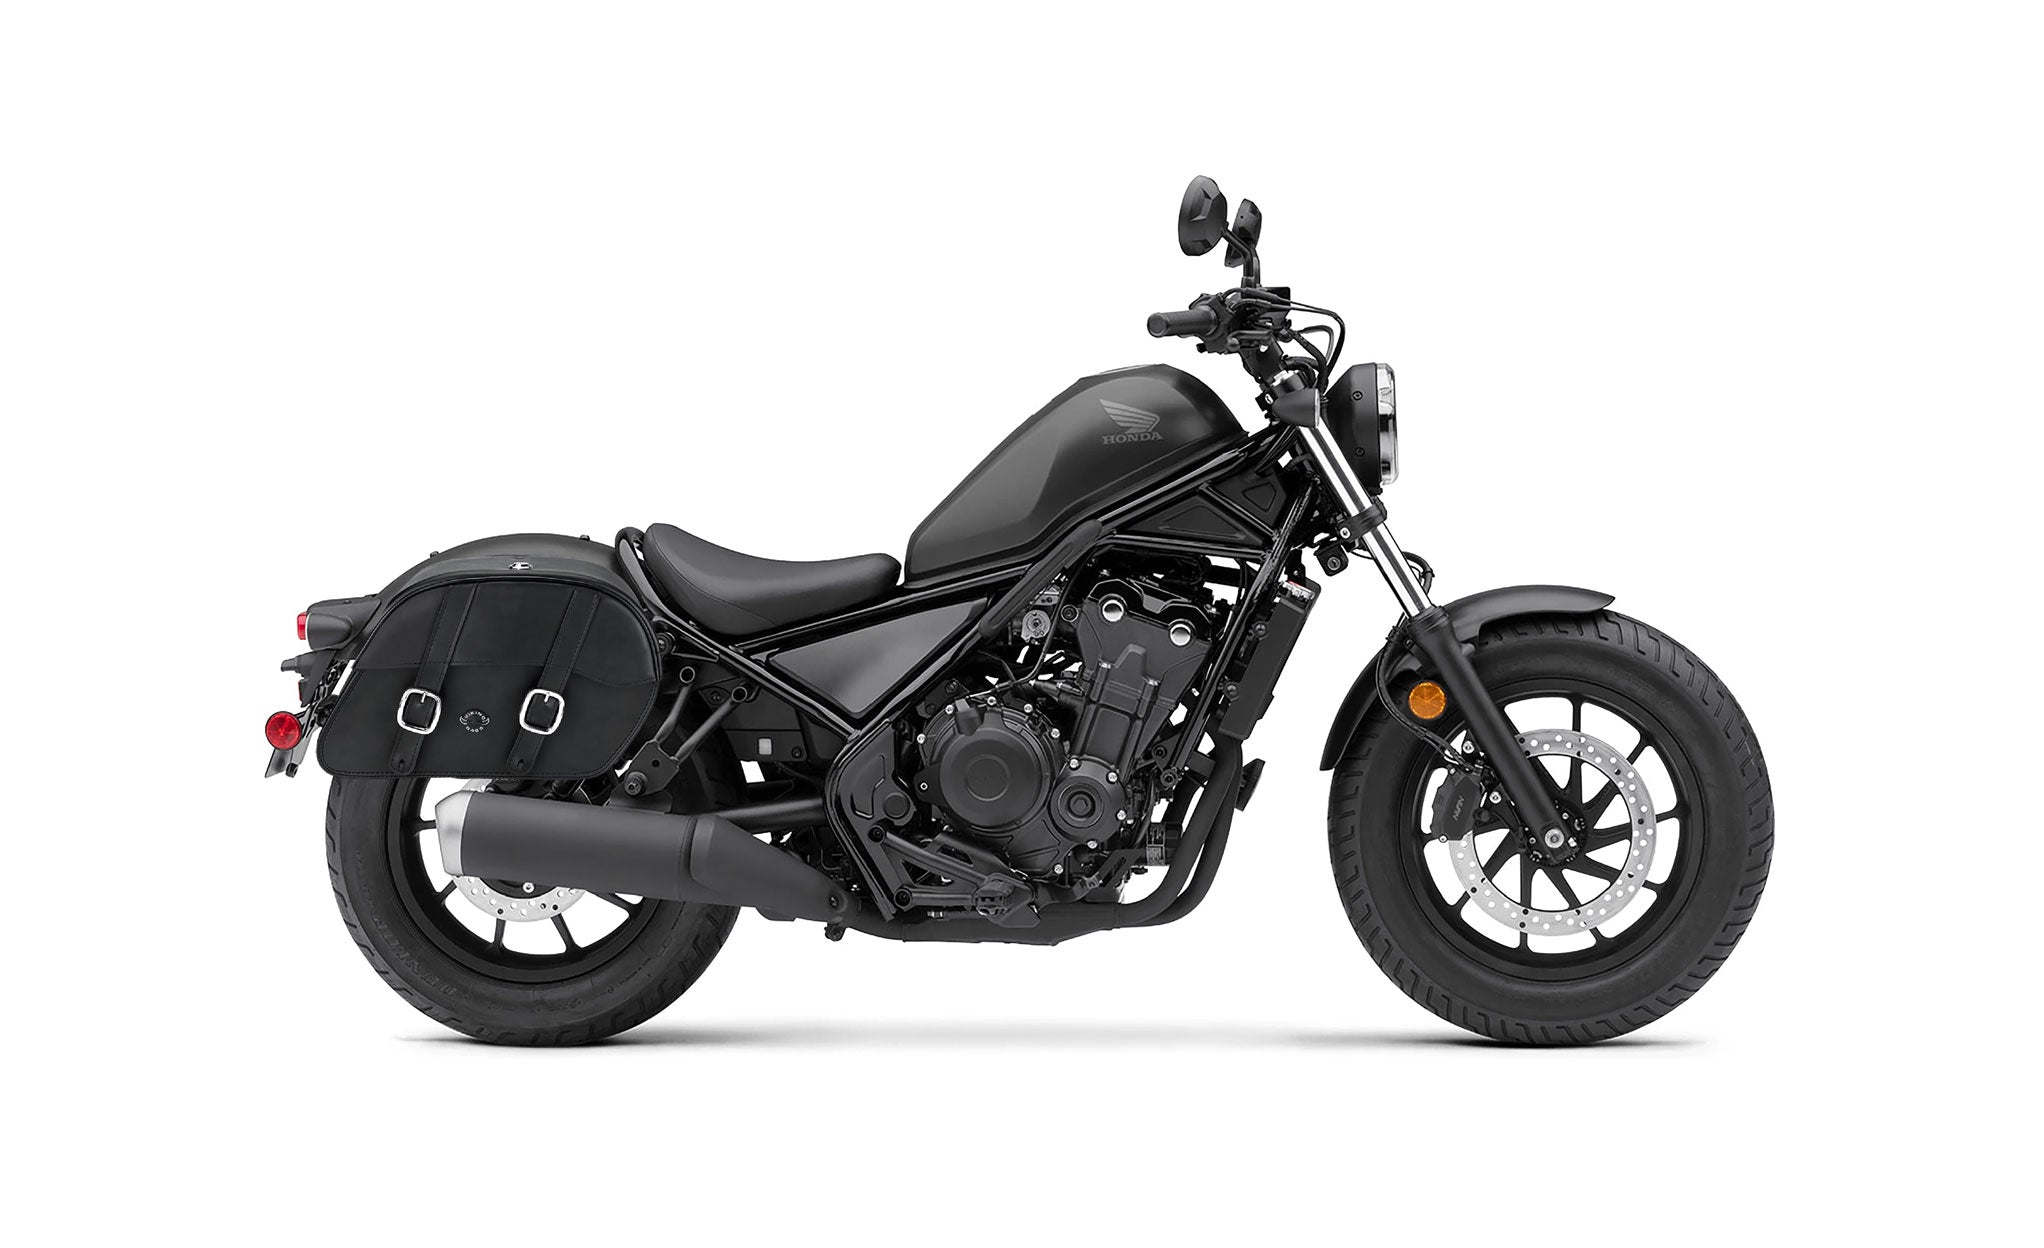 Viking Skarner Large Honda Rebel 500 Shock Cut Out Leather Motorcycle Saddlebags on Bike Photo @expand